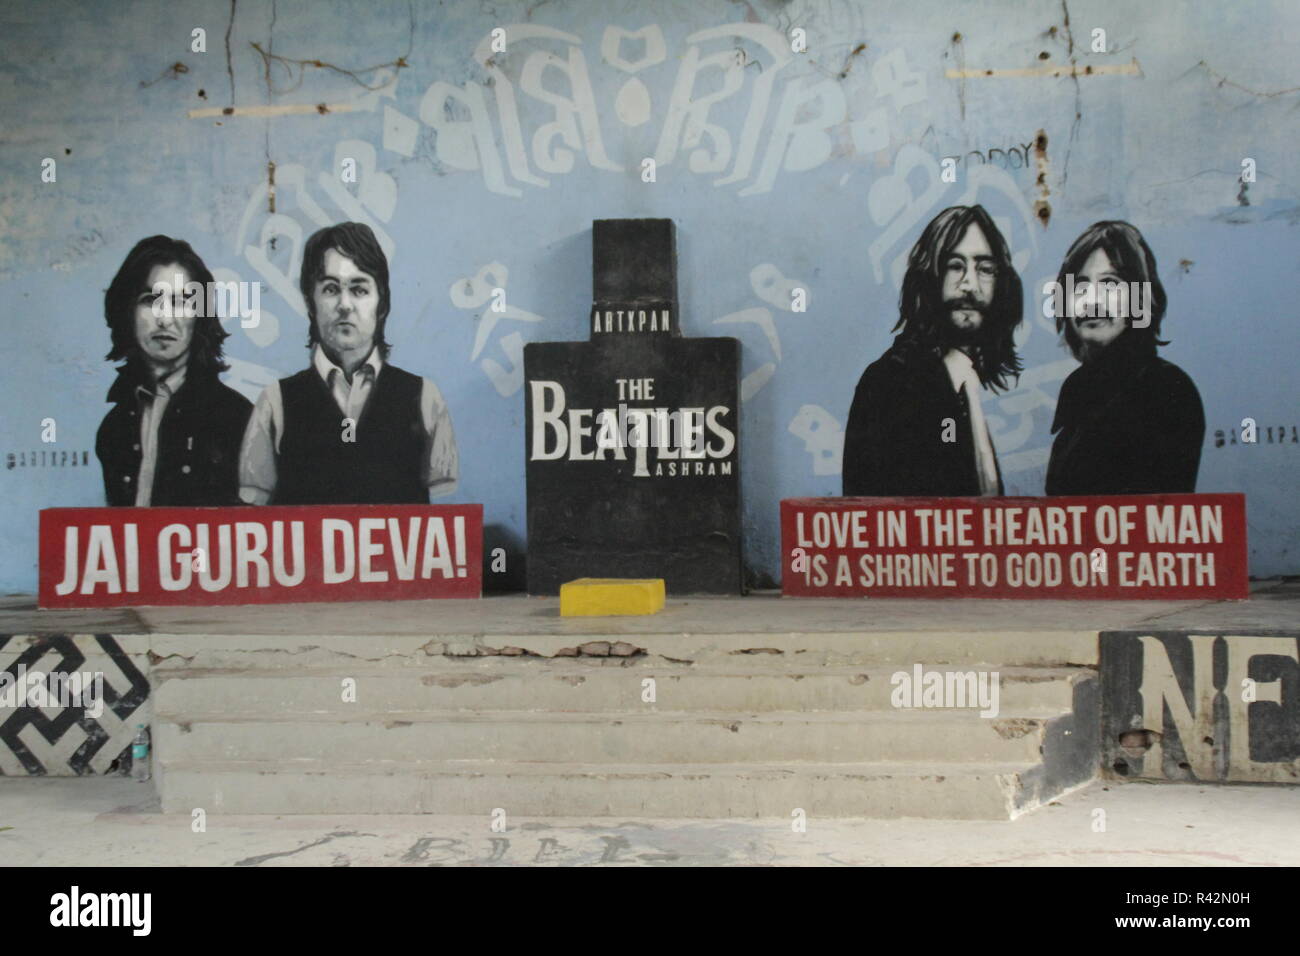 Art and graffiti at the Beatles Ashram in Rishikesh, India Stock Photo